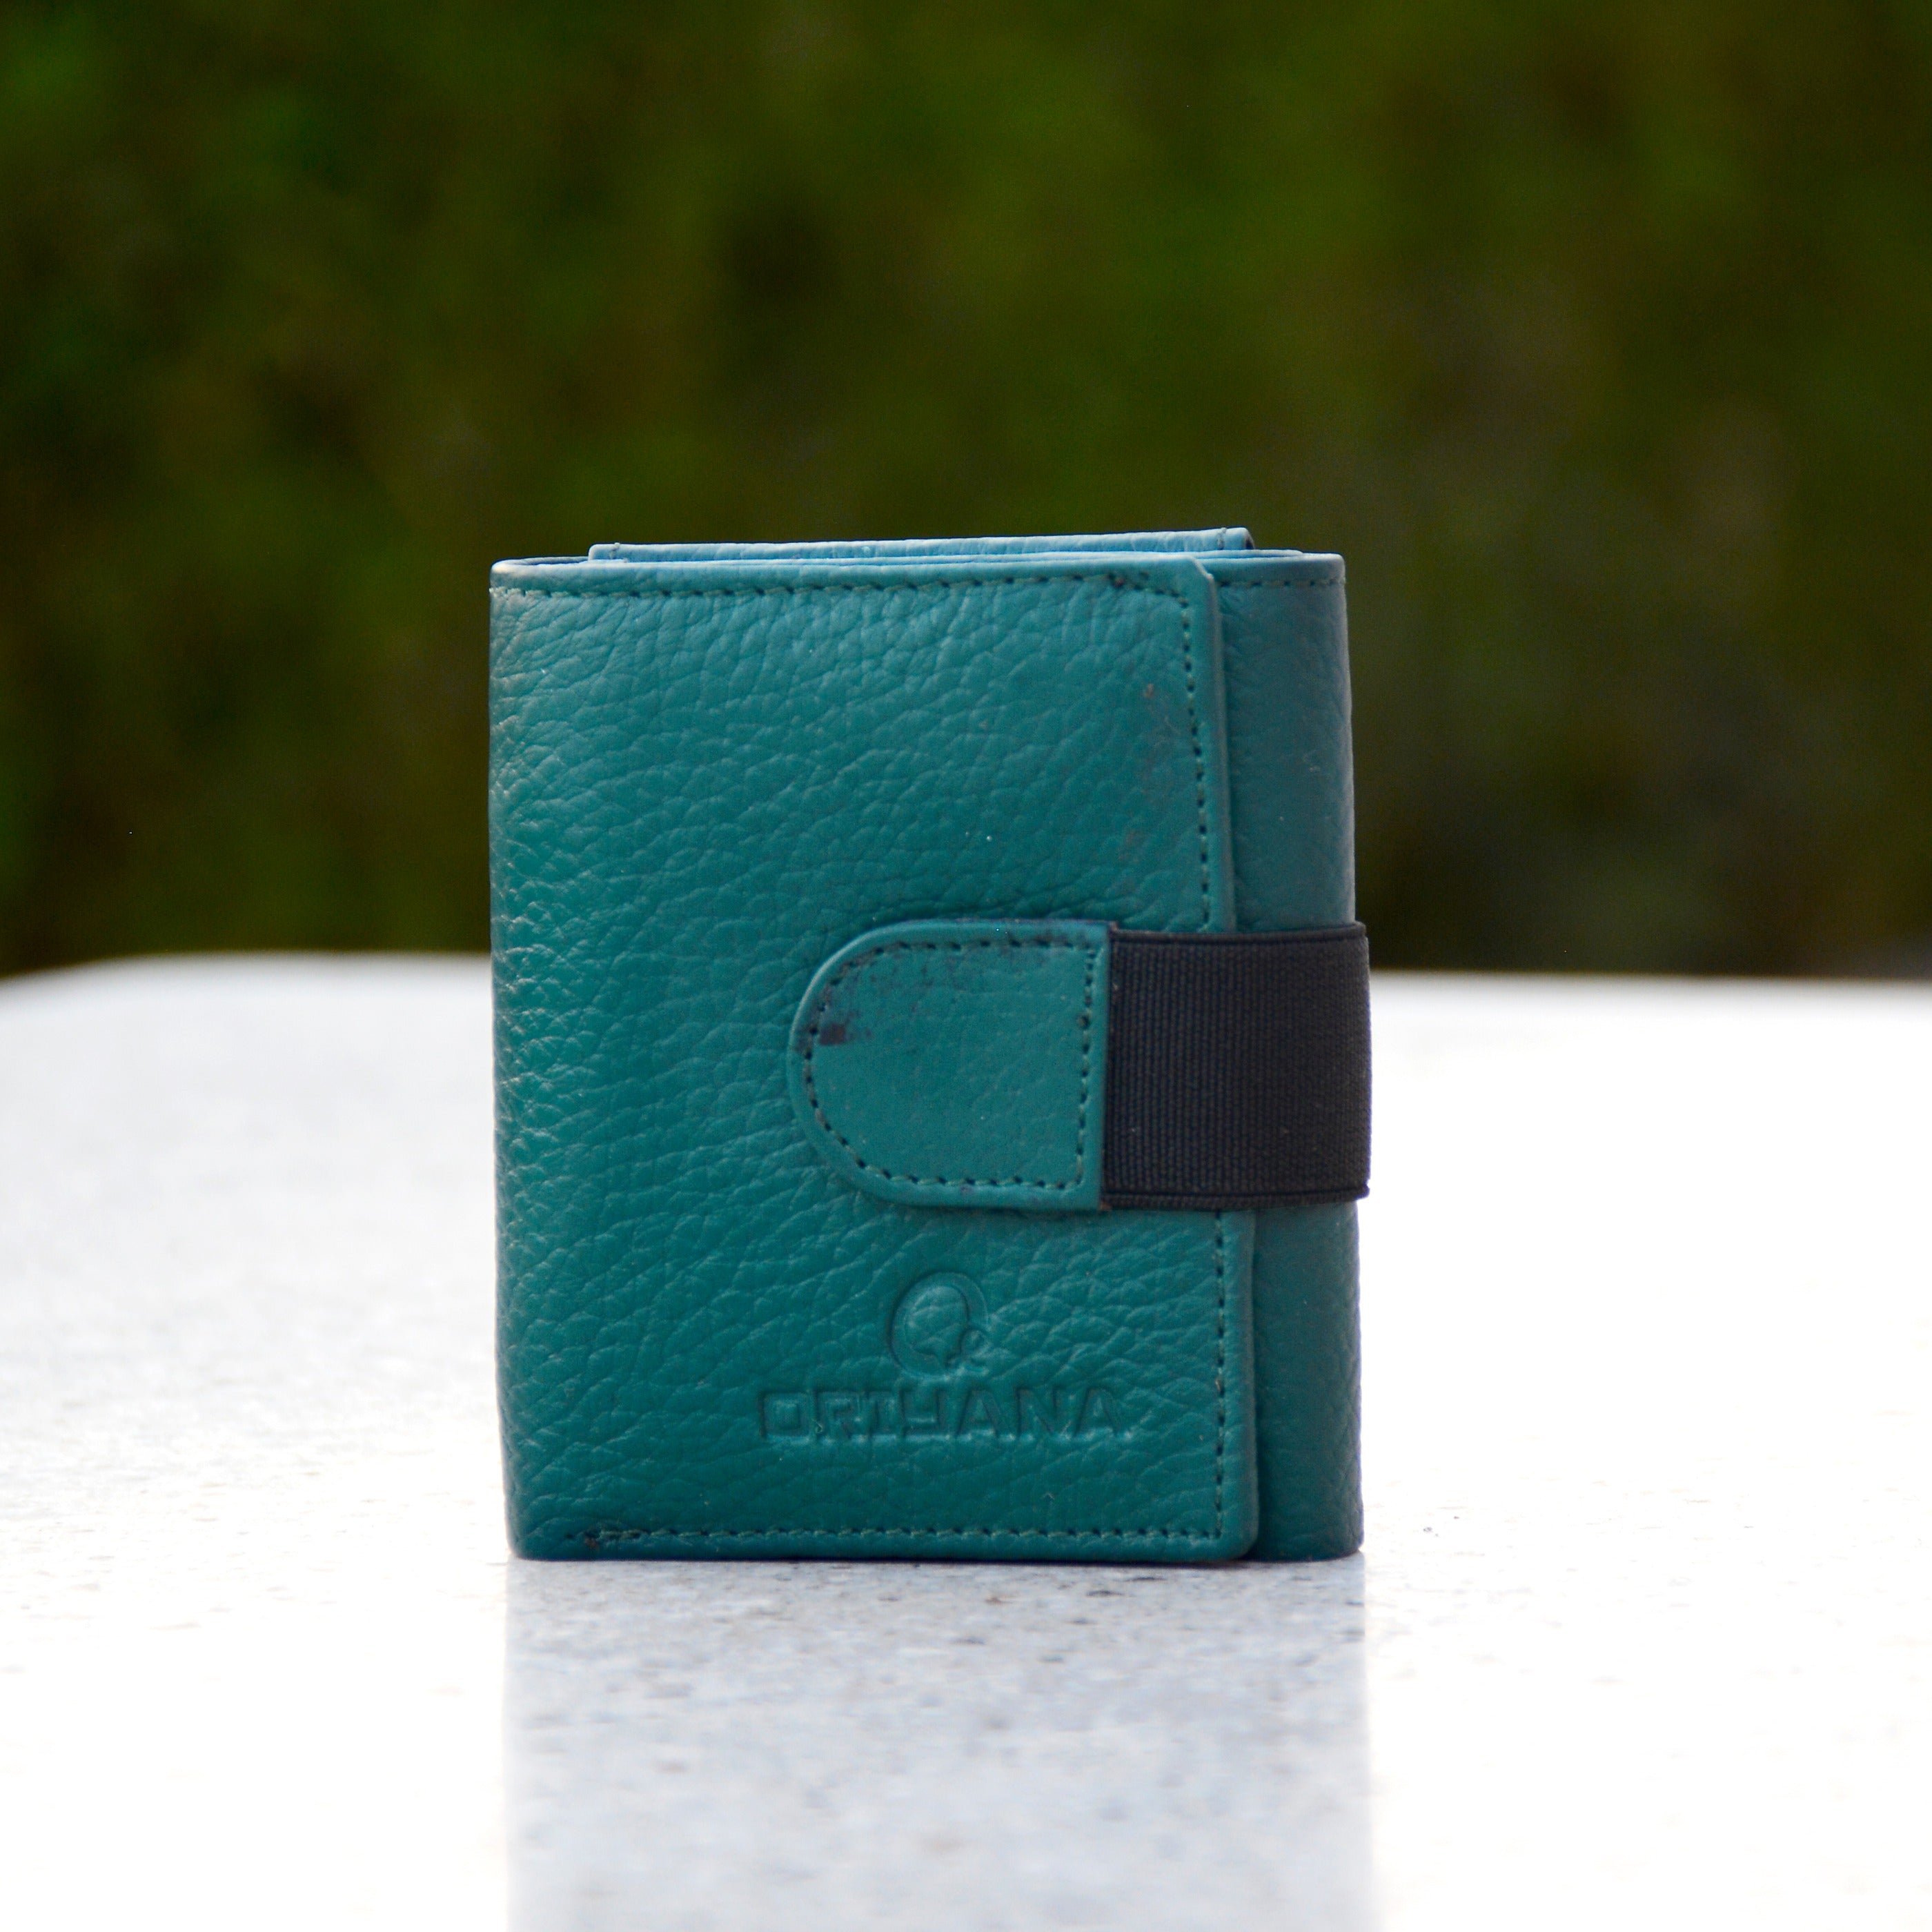 Men's Genuine Leather Wallet | 3 Fold Button Wallet wlt0001 | Llwltglcxx